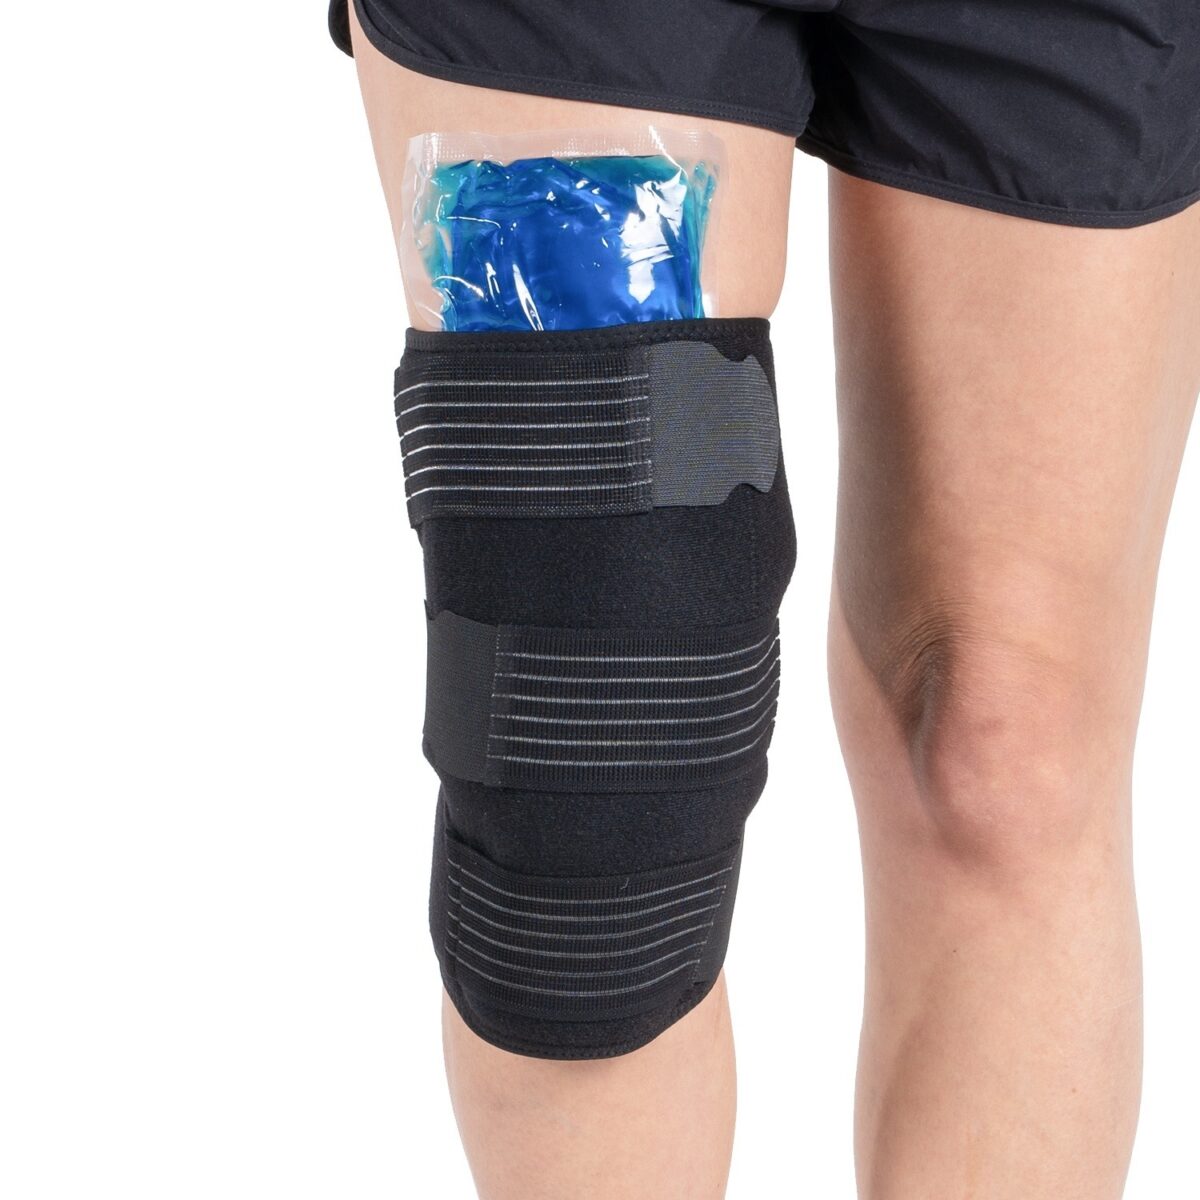 wingmed orthopedic equipments W511 knee support post arthroscopy 24